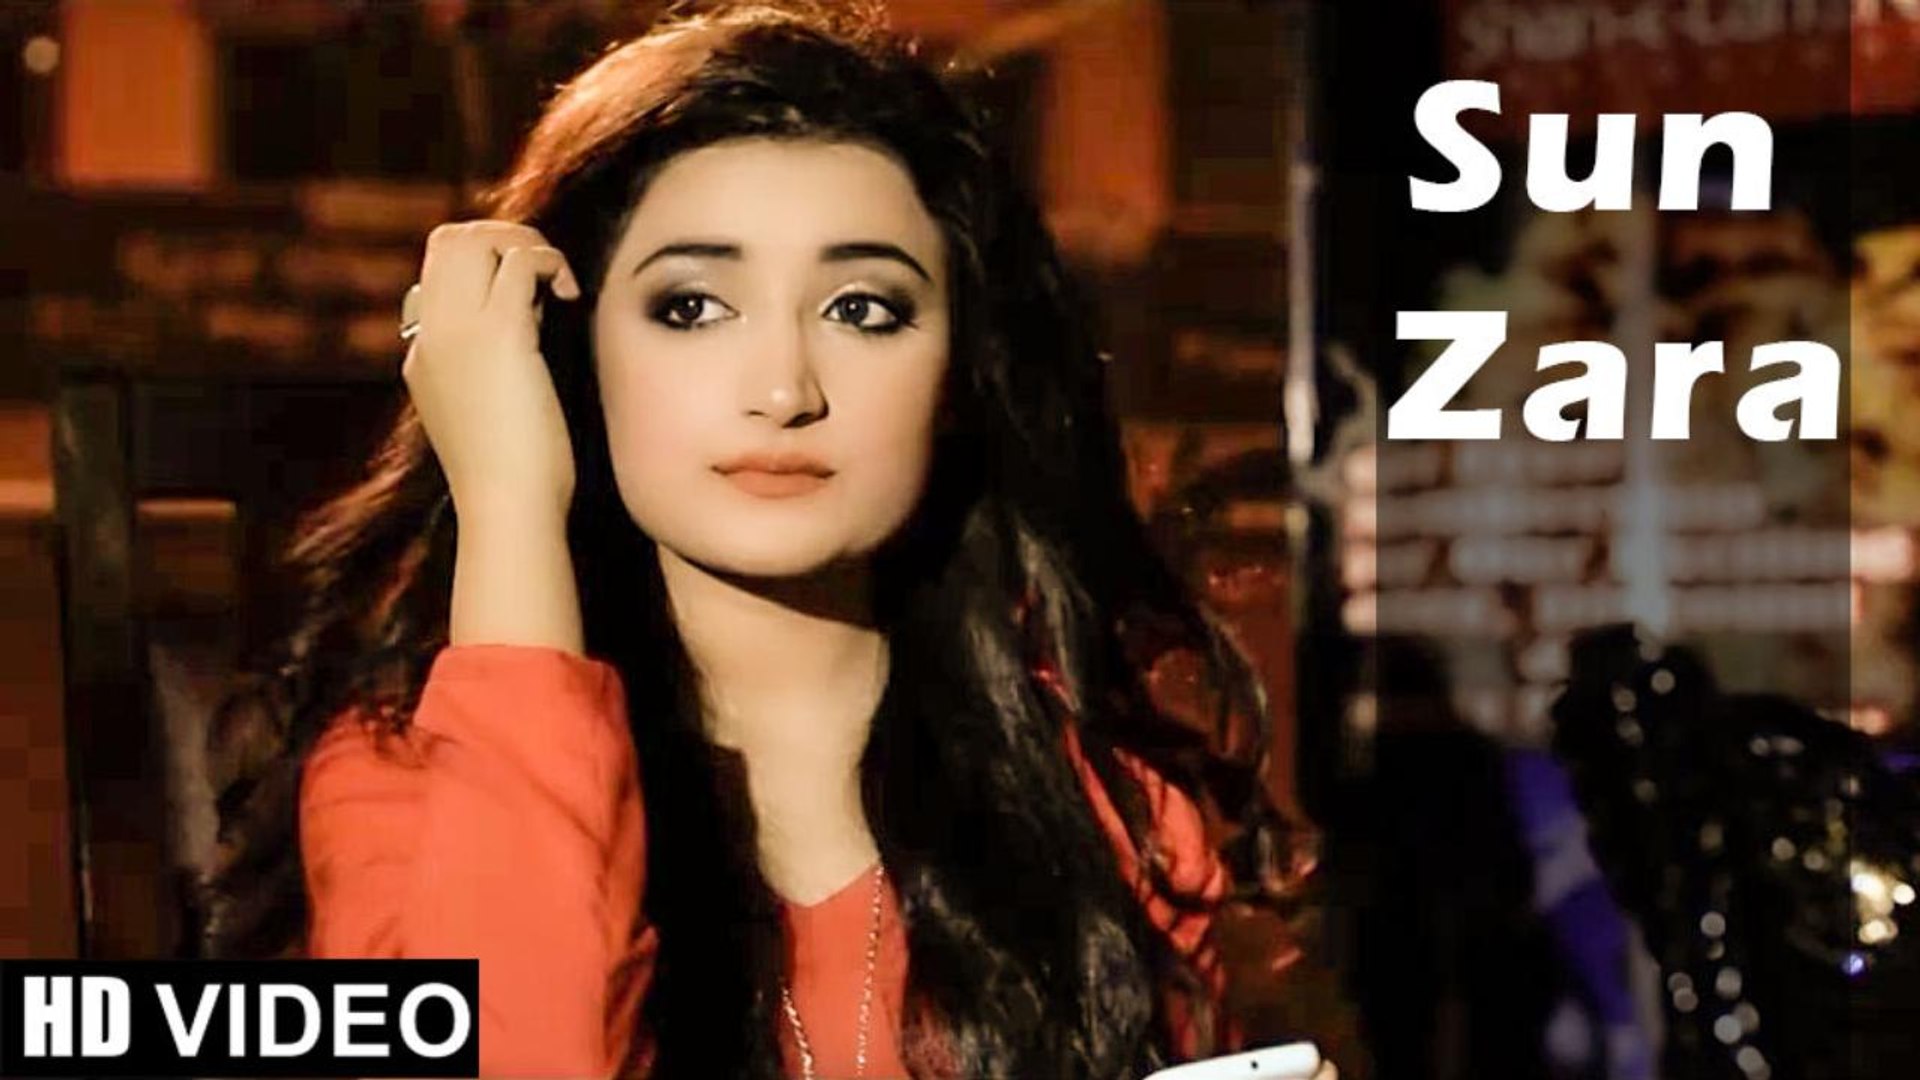 Sun Zara Soniye Sun Zara (Just Listen) FULL HD VIDEO Song 1080p TEASER ¦  Jayden ft. Swaati ¦ New Bollywood Hindi Songs - video Dailymotion